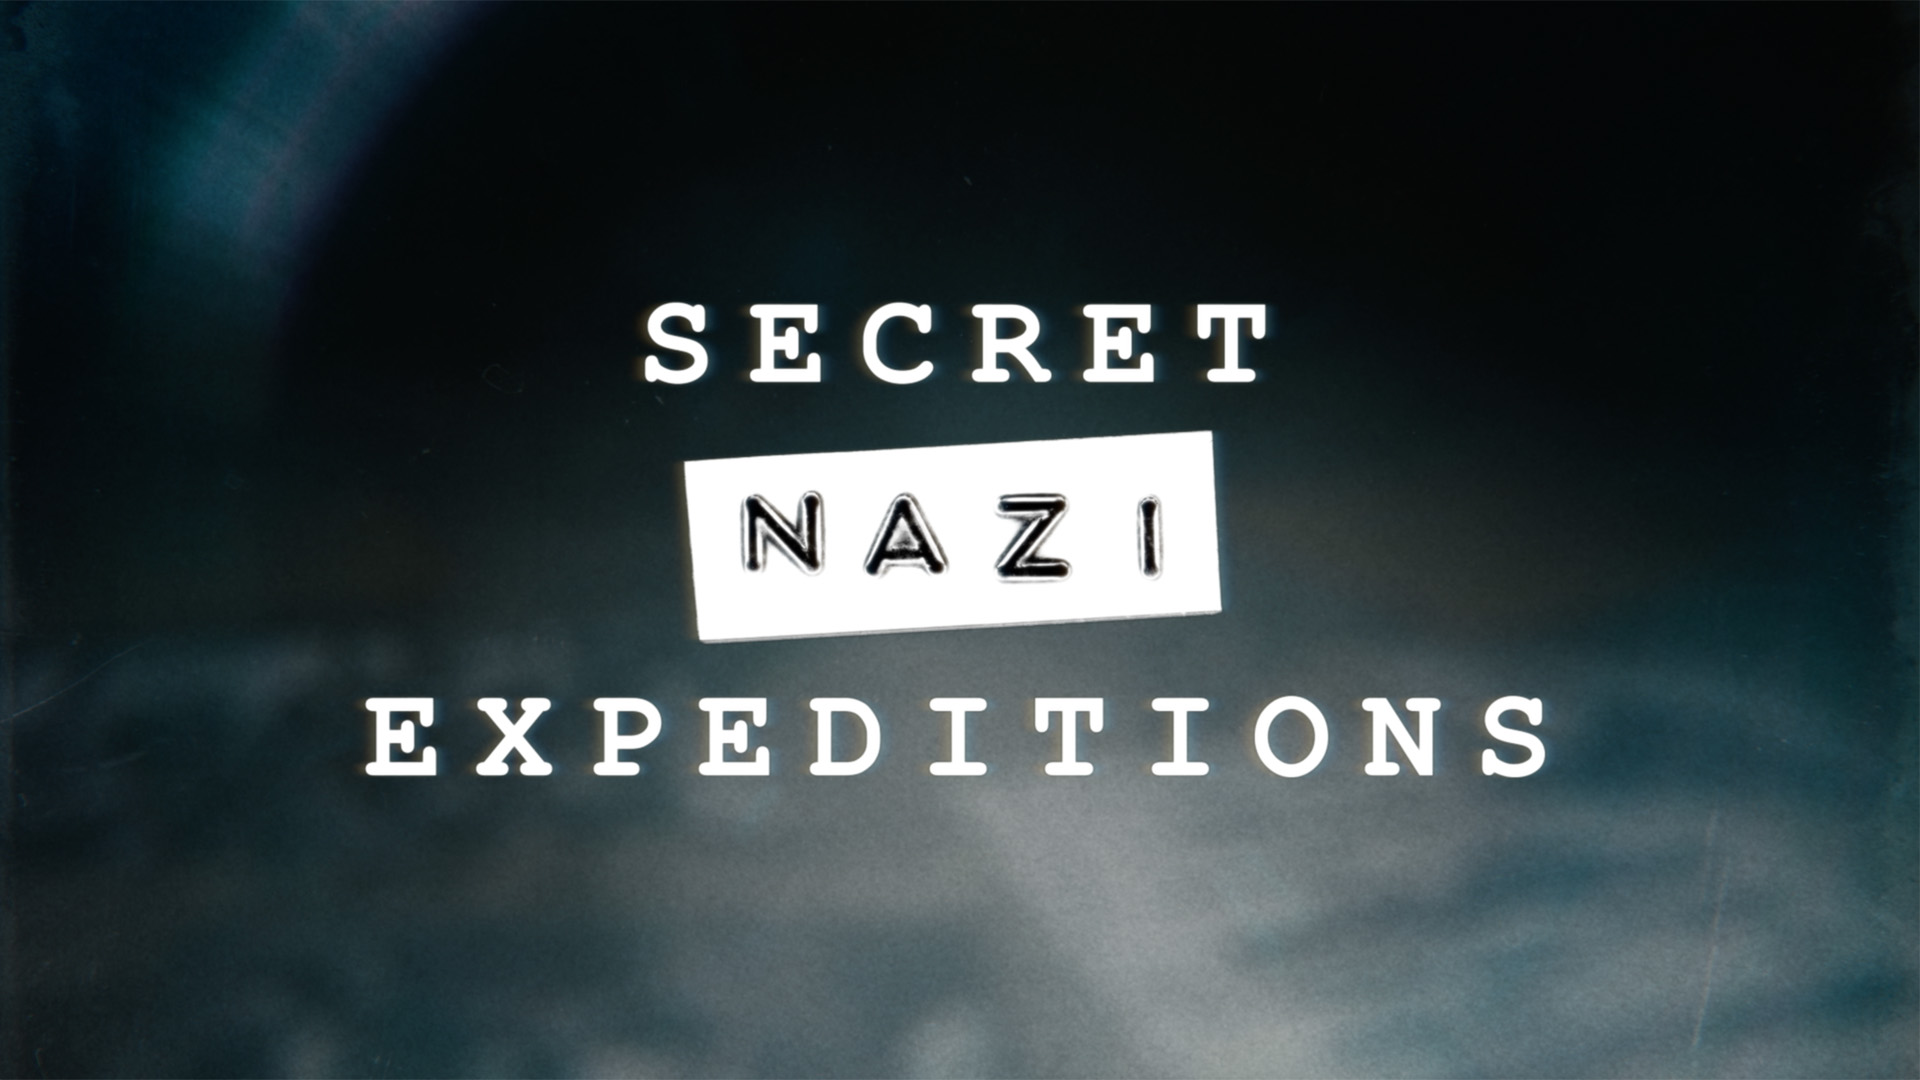 Secret Nazi Expeditions